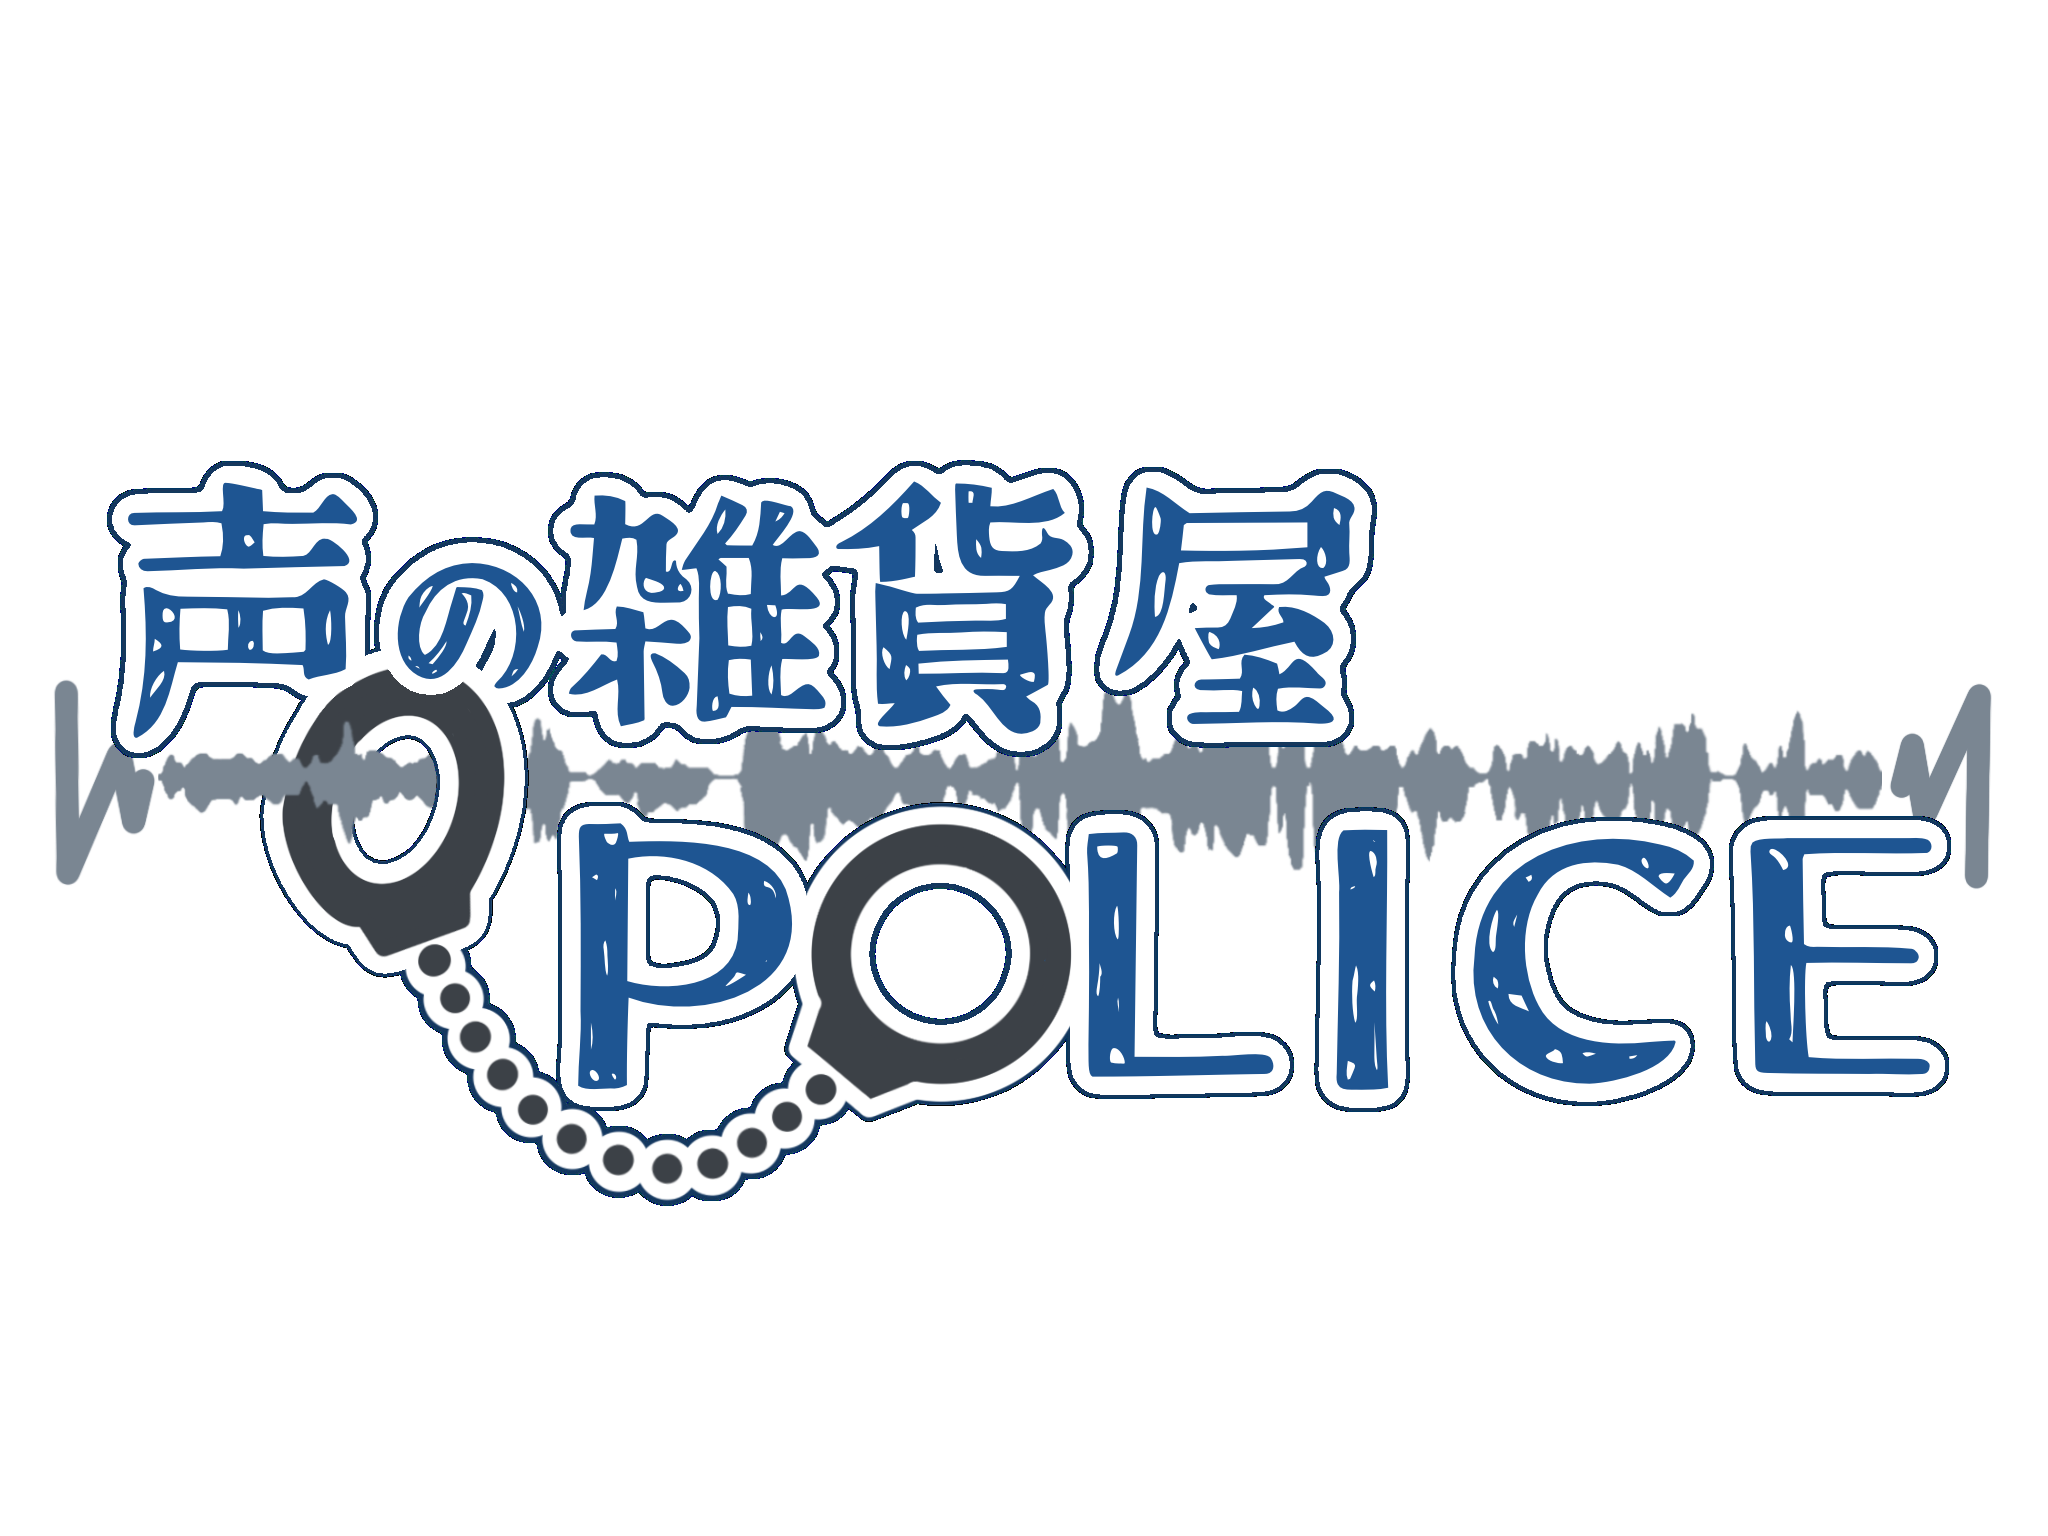 動画素材POLICE